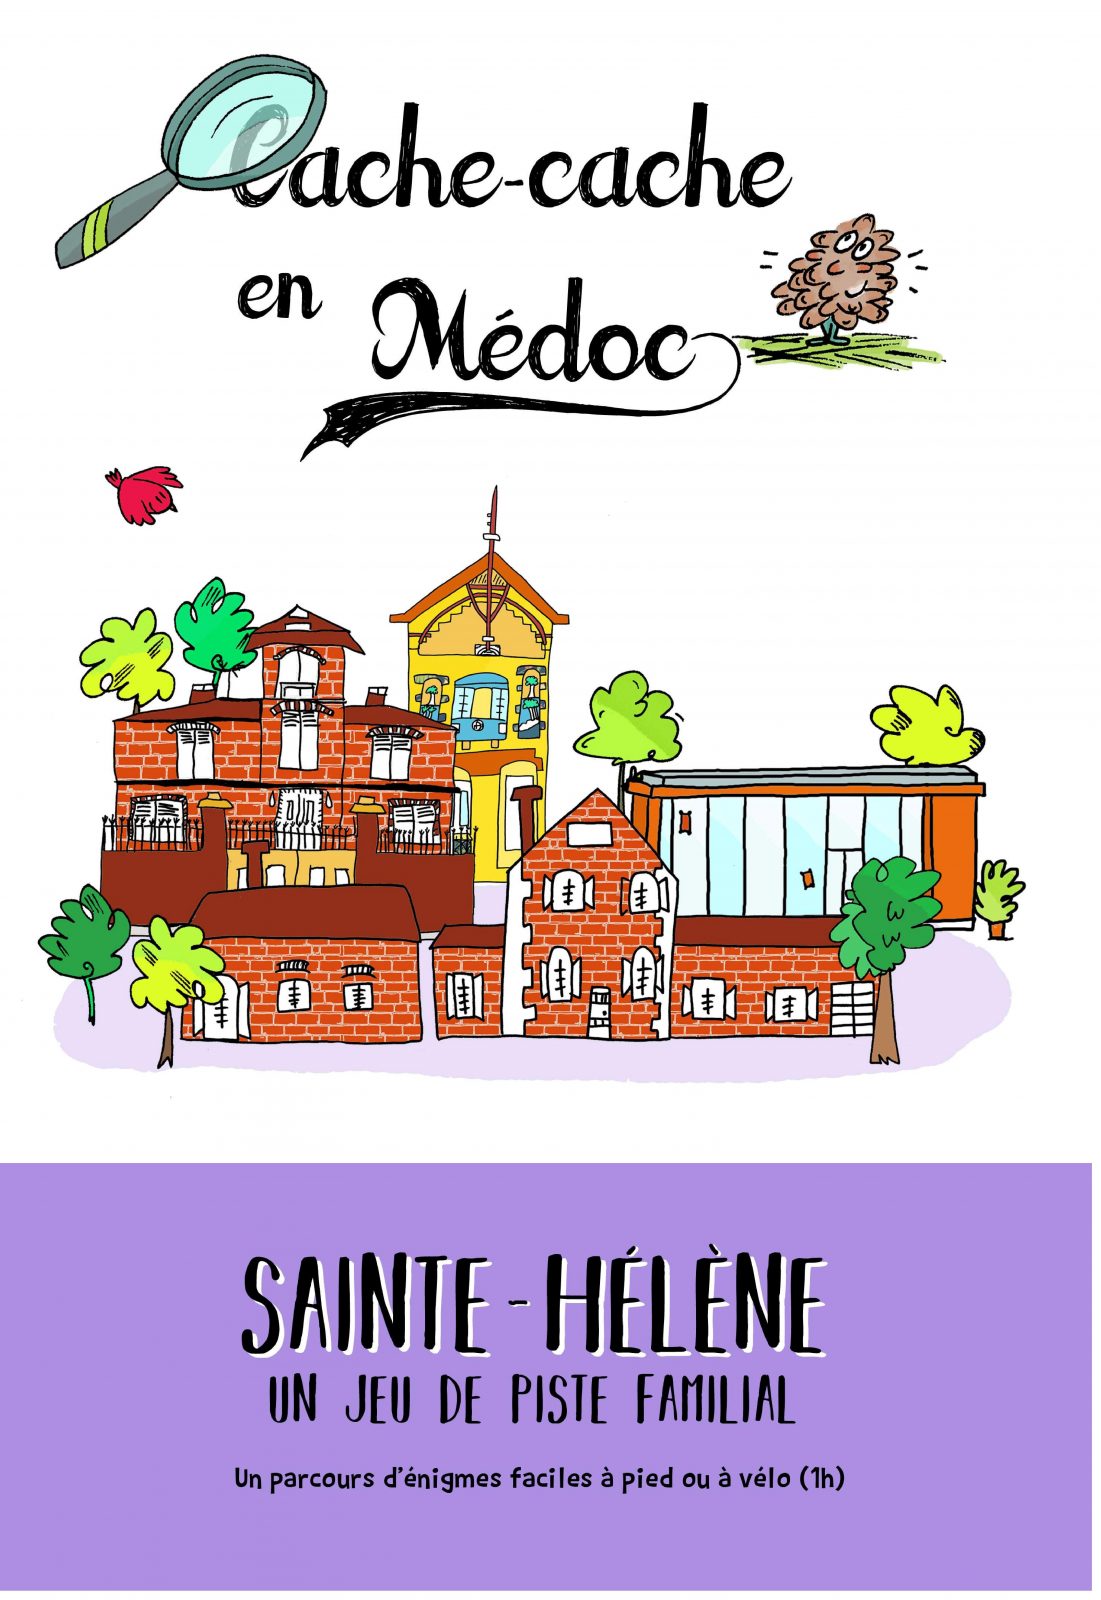 Hide and seek in the Médoc in Sainte-Hélène